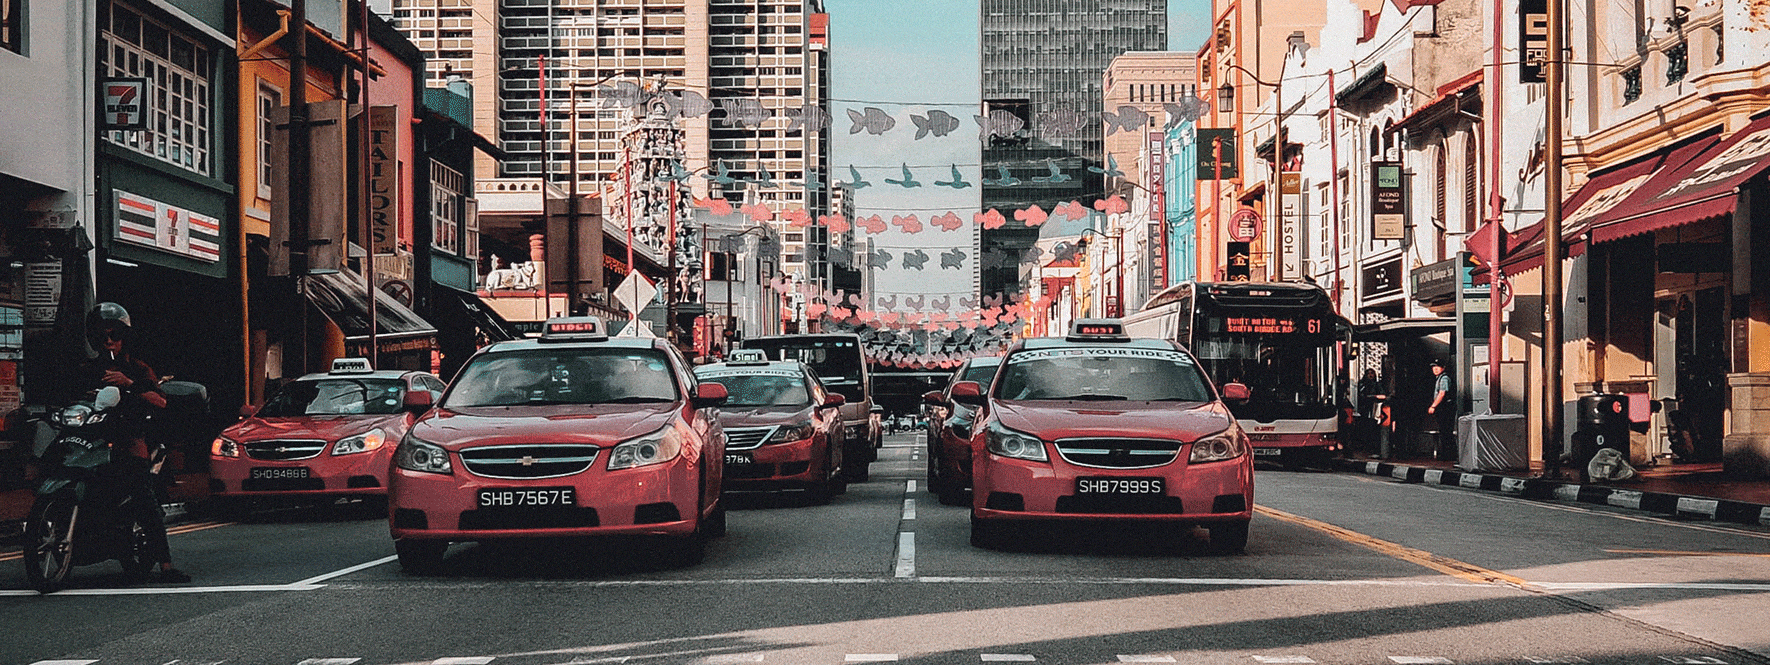 Singapore Streets